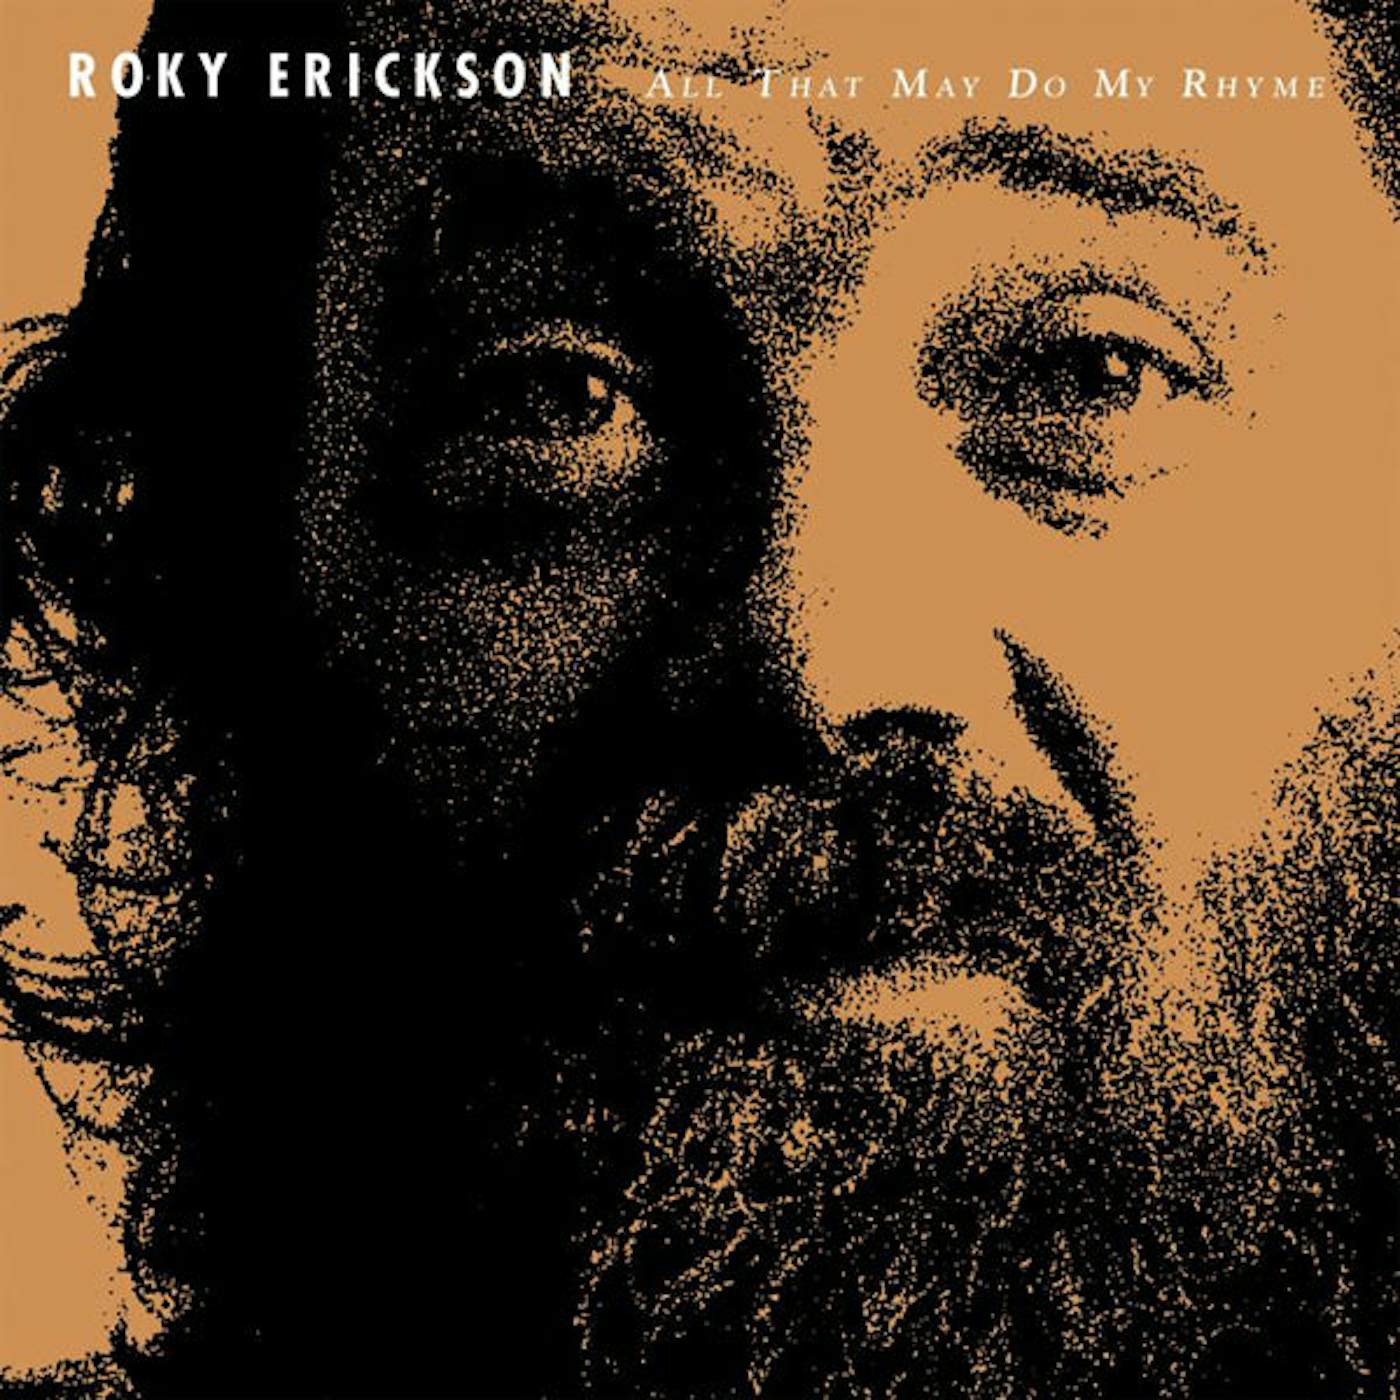 Roky Erickson LP - All That May Do My Rhyme (White Vinyl)